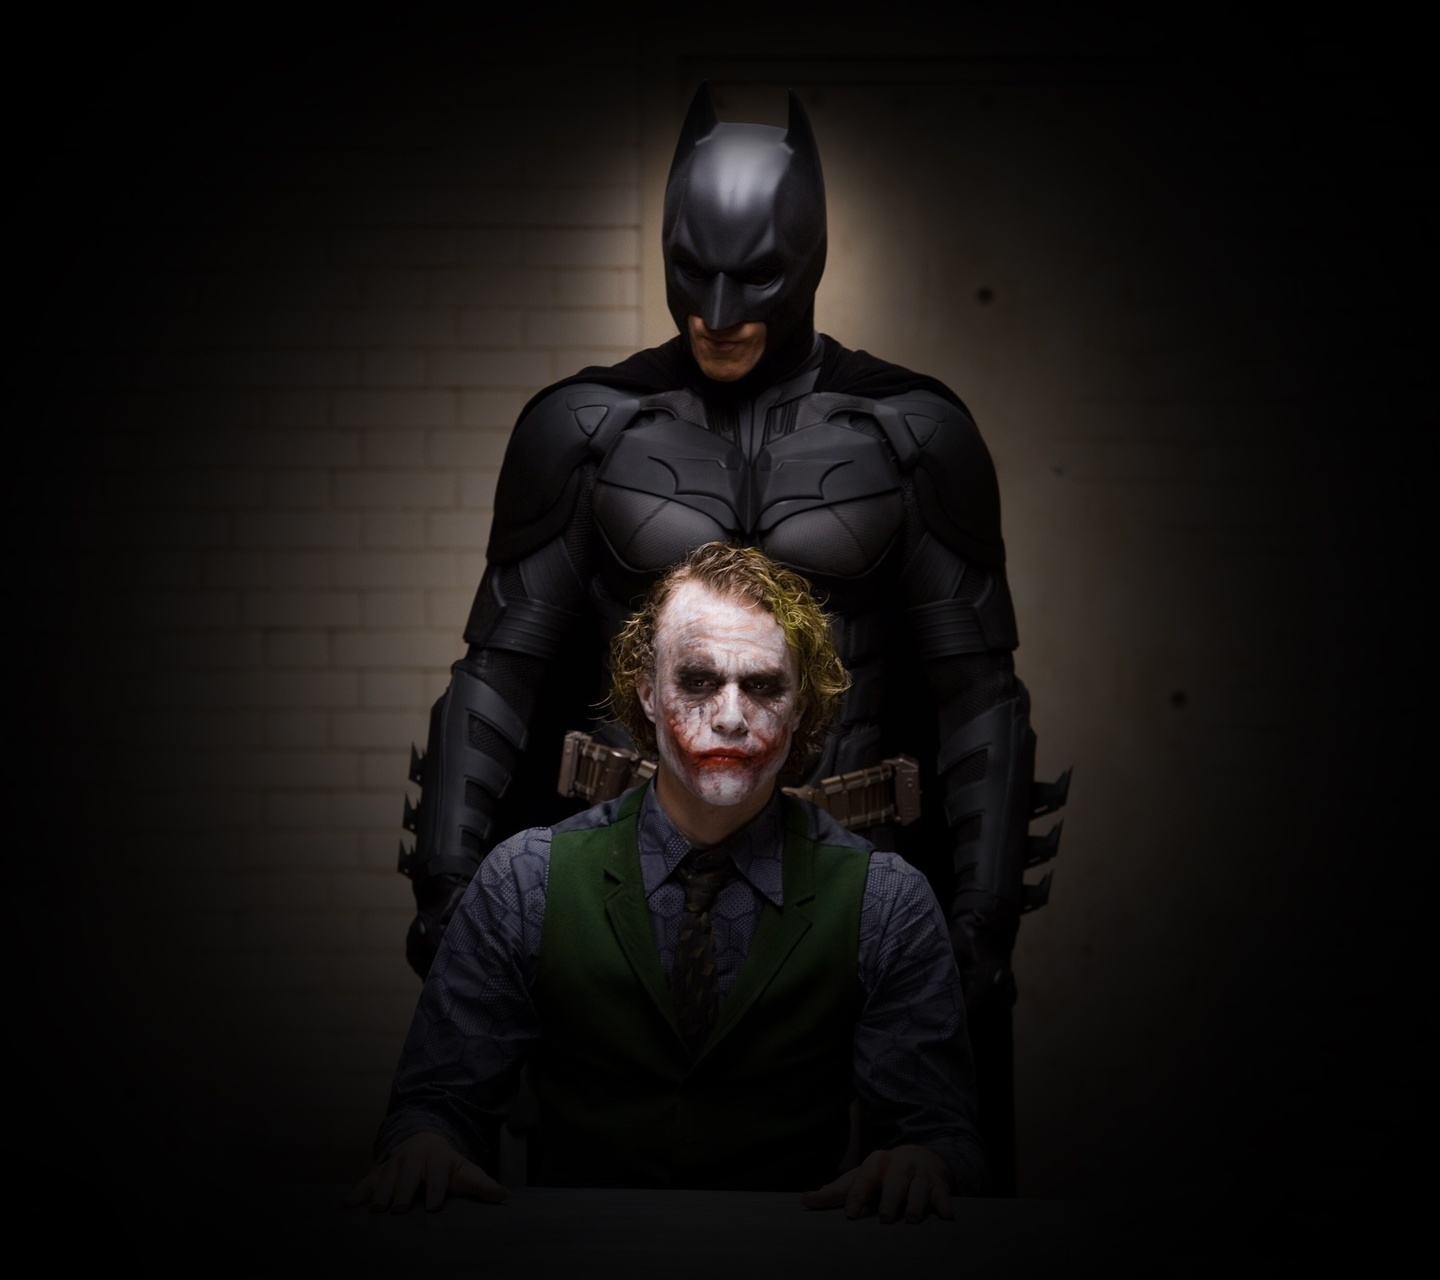 Joker Vs Batman Wallpaper HD On Picsfair